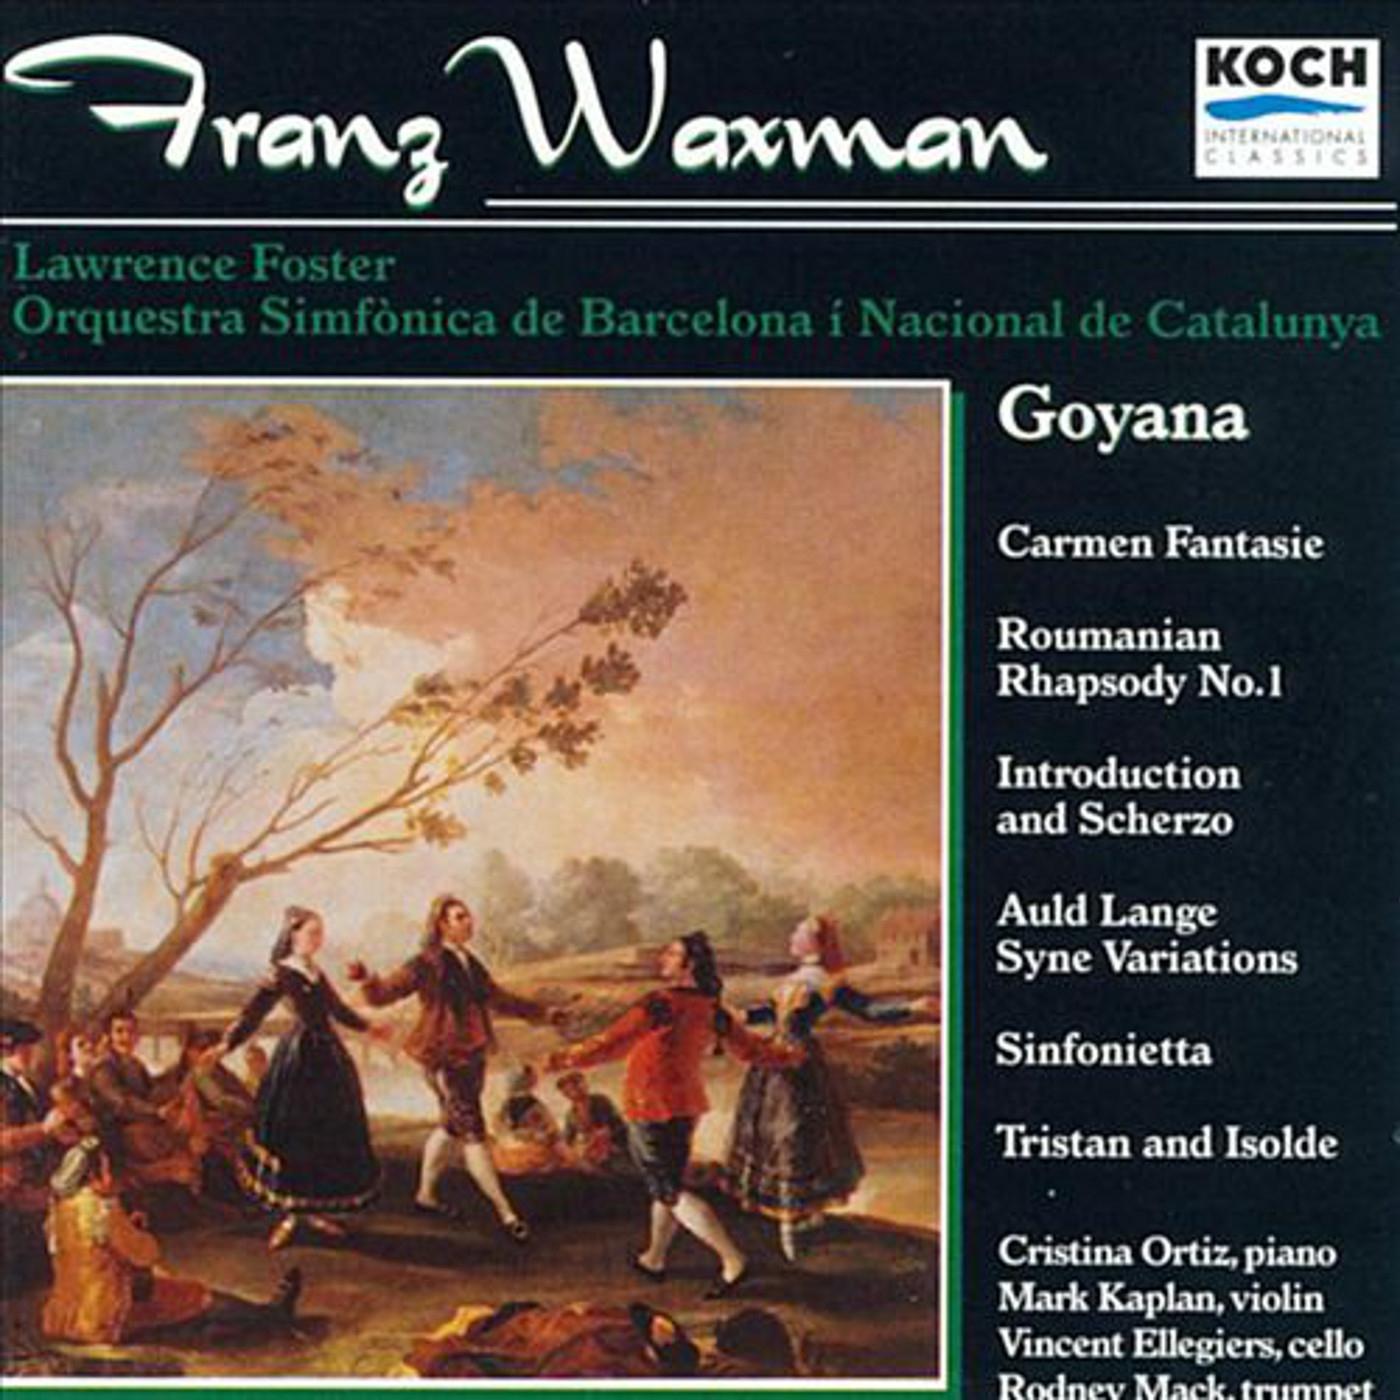 Waxman: "Goyana" - Carmen Fantasy; Roumanian Rhapsody No. 1' Introduction And Scherzo; Sinfonietta; Others